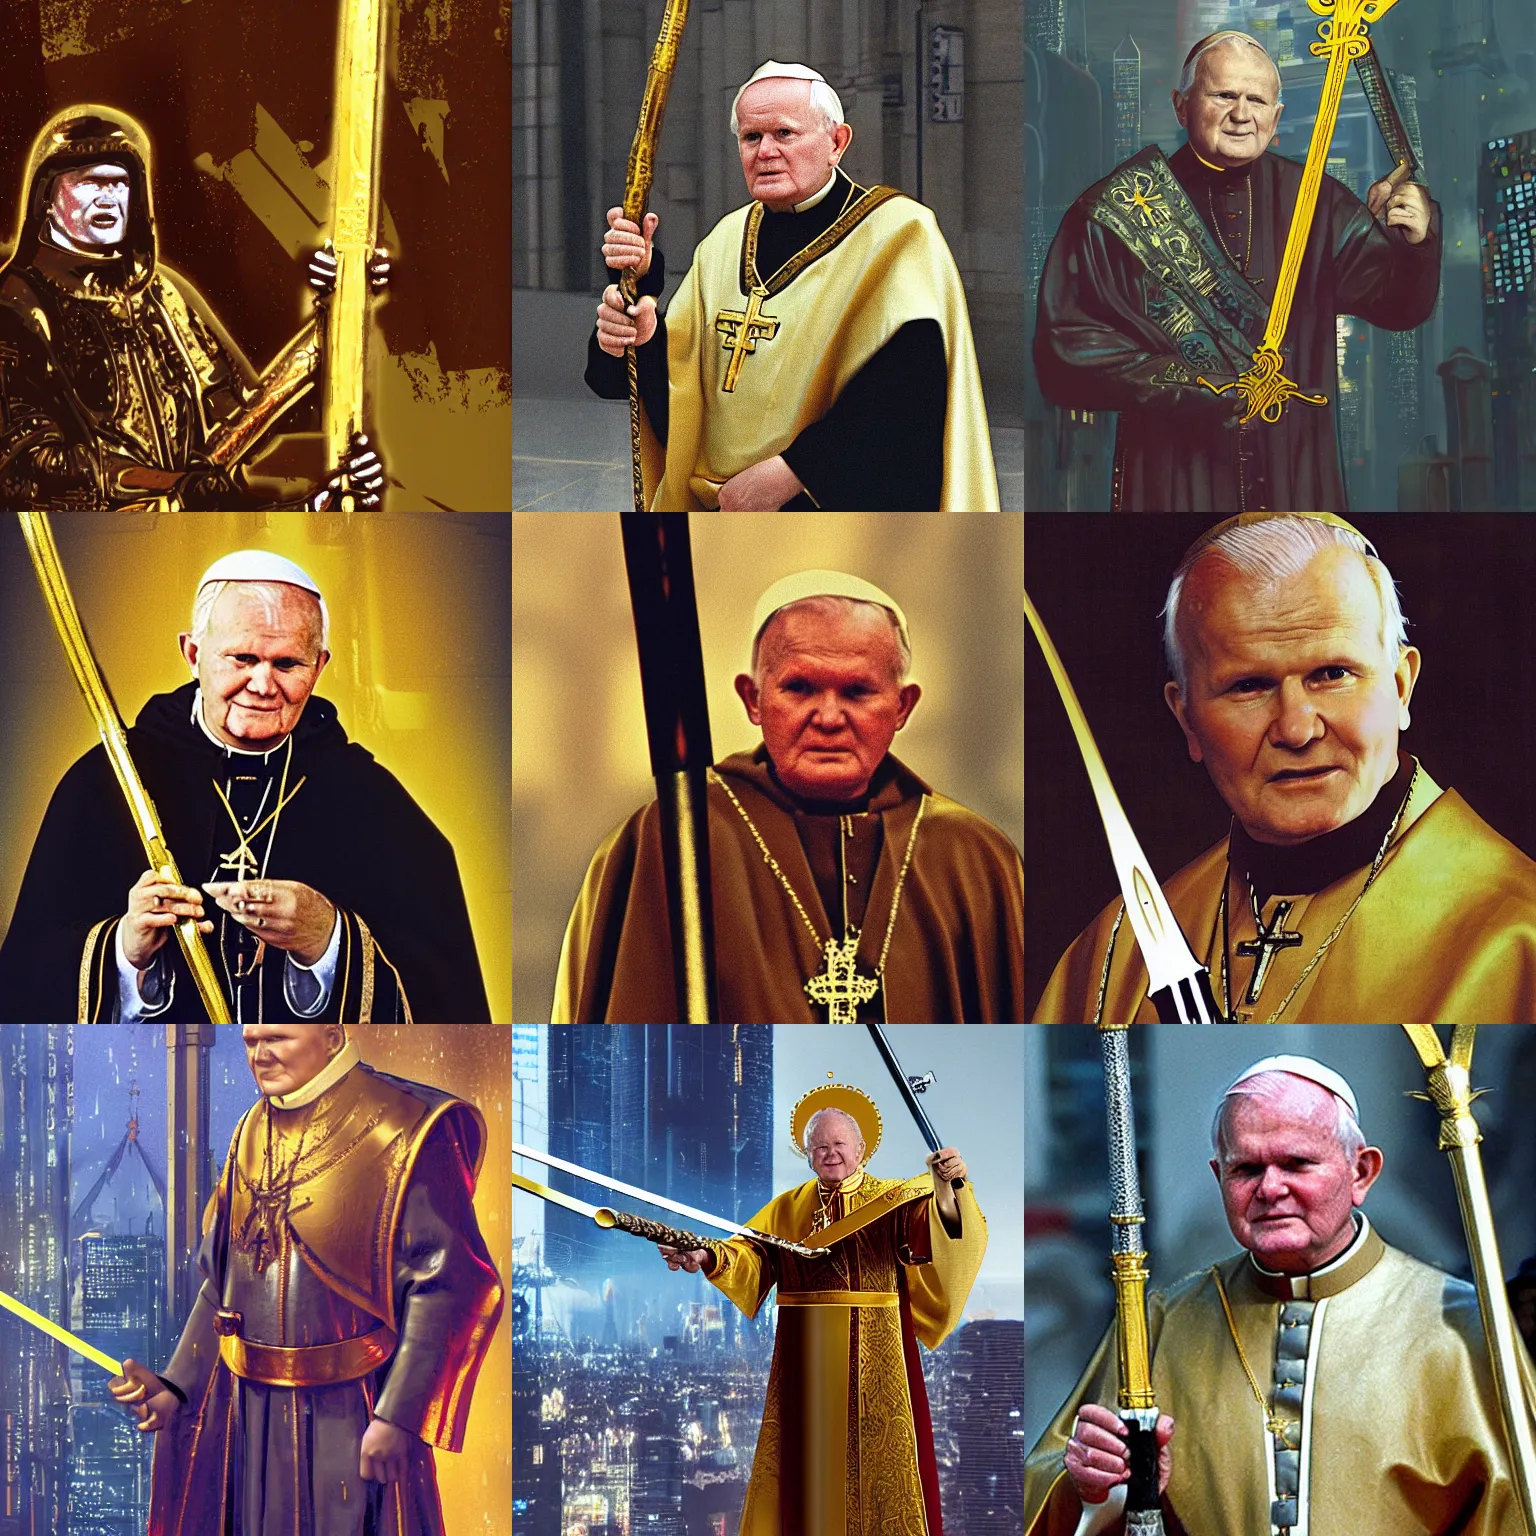 Prompt: John Paul II with a long golden sword in a cyberpunk city